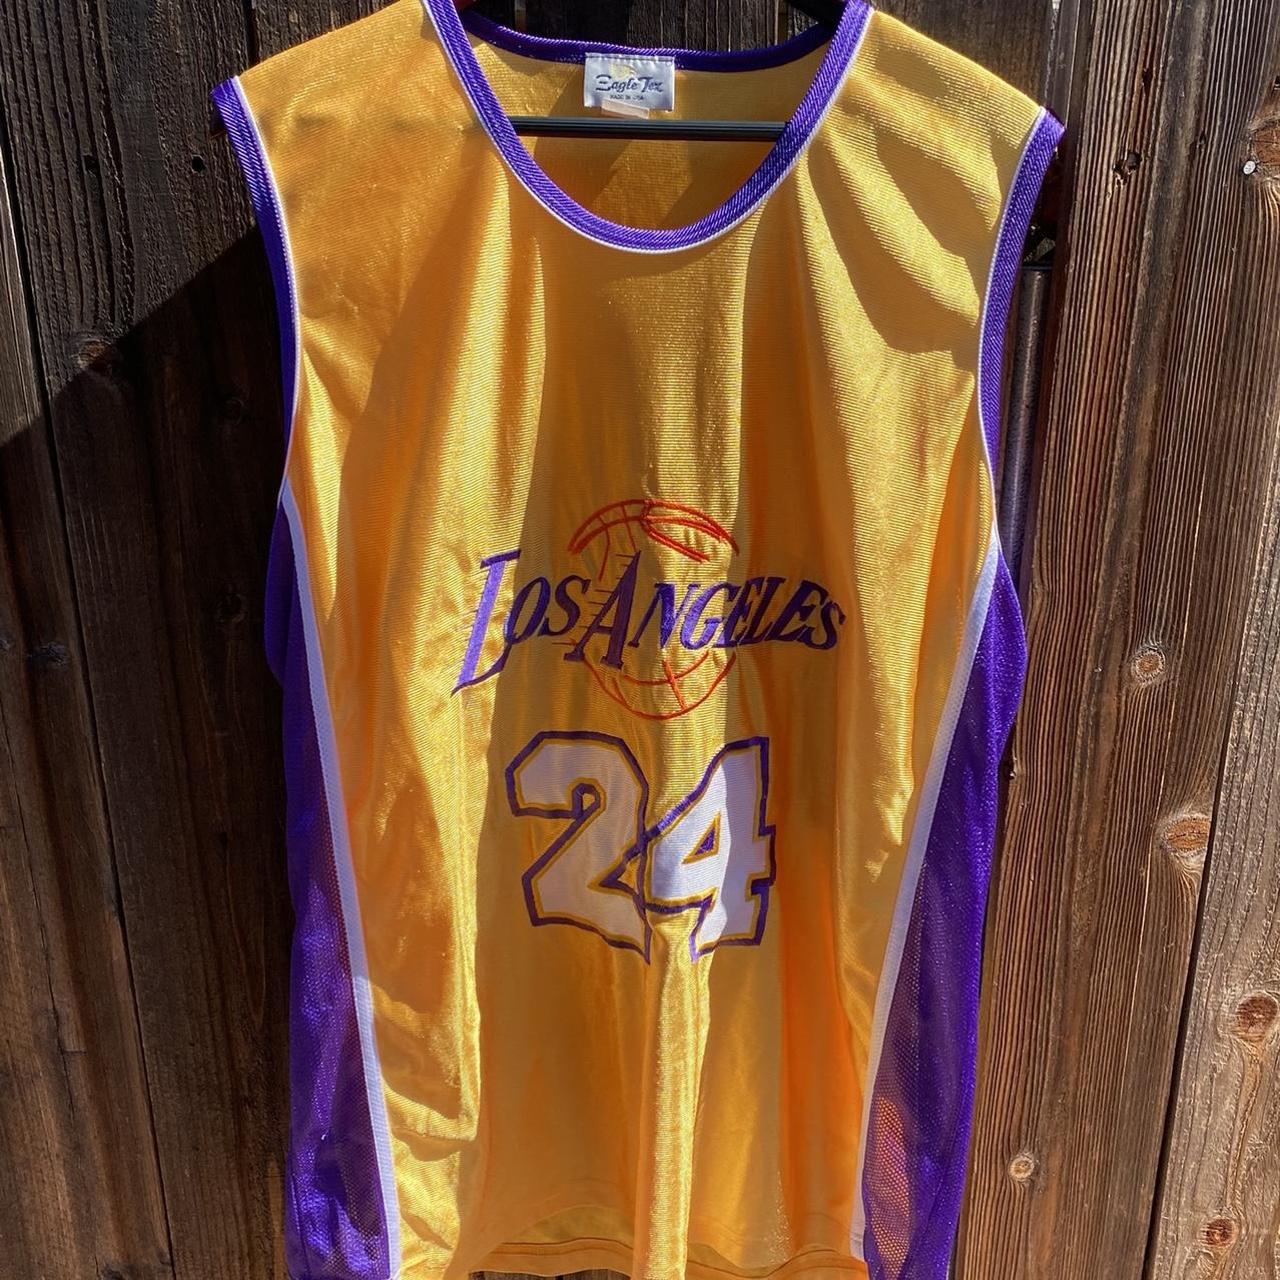 Vintage Lakers jersey - Depop